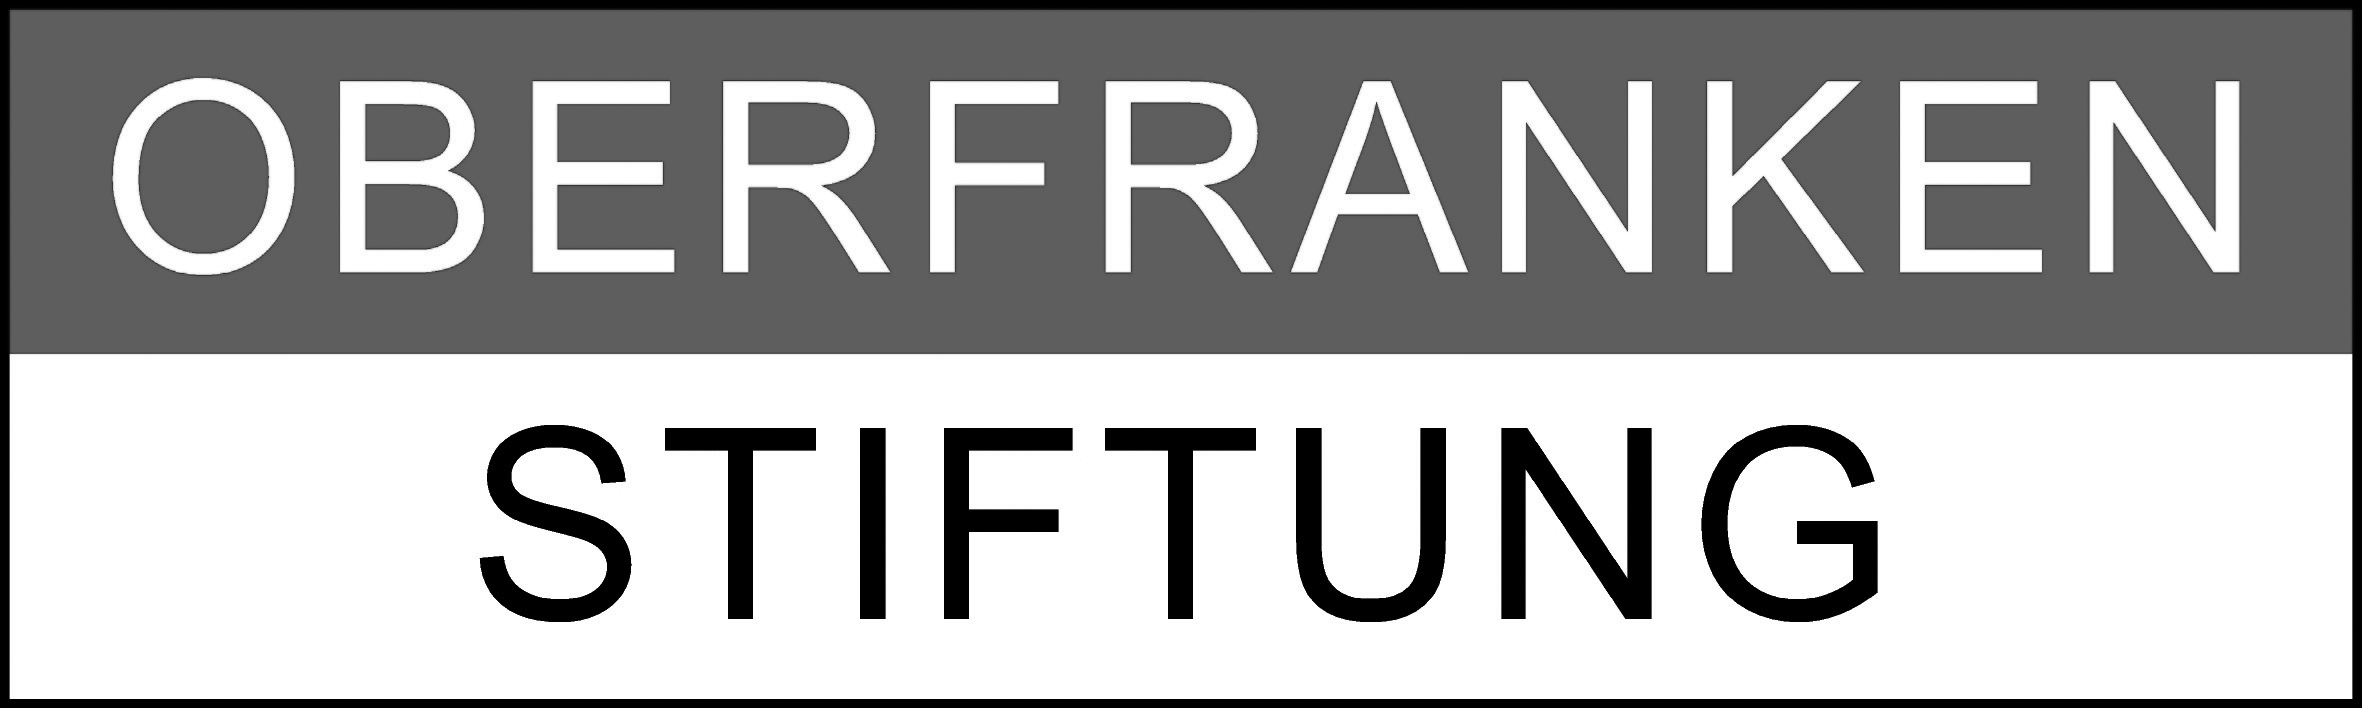 OberfrankenStiftung Logo 10x3 600dpi sw